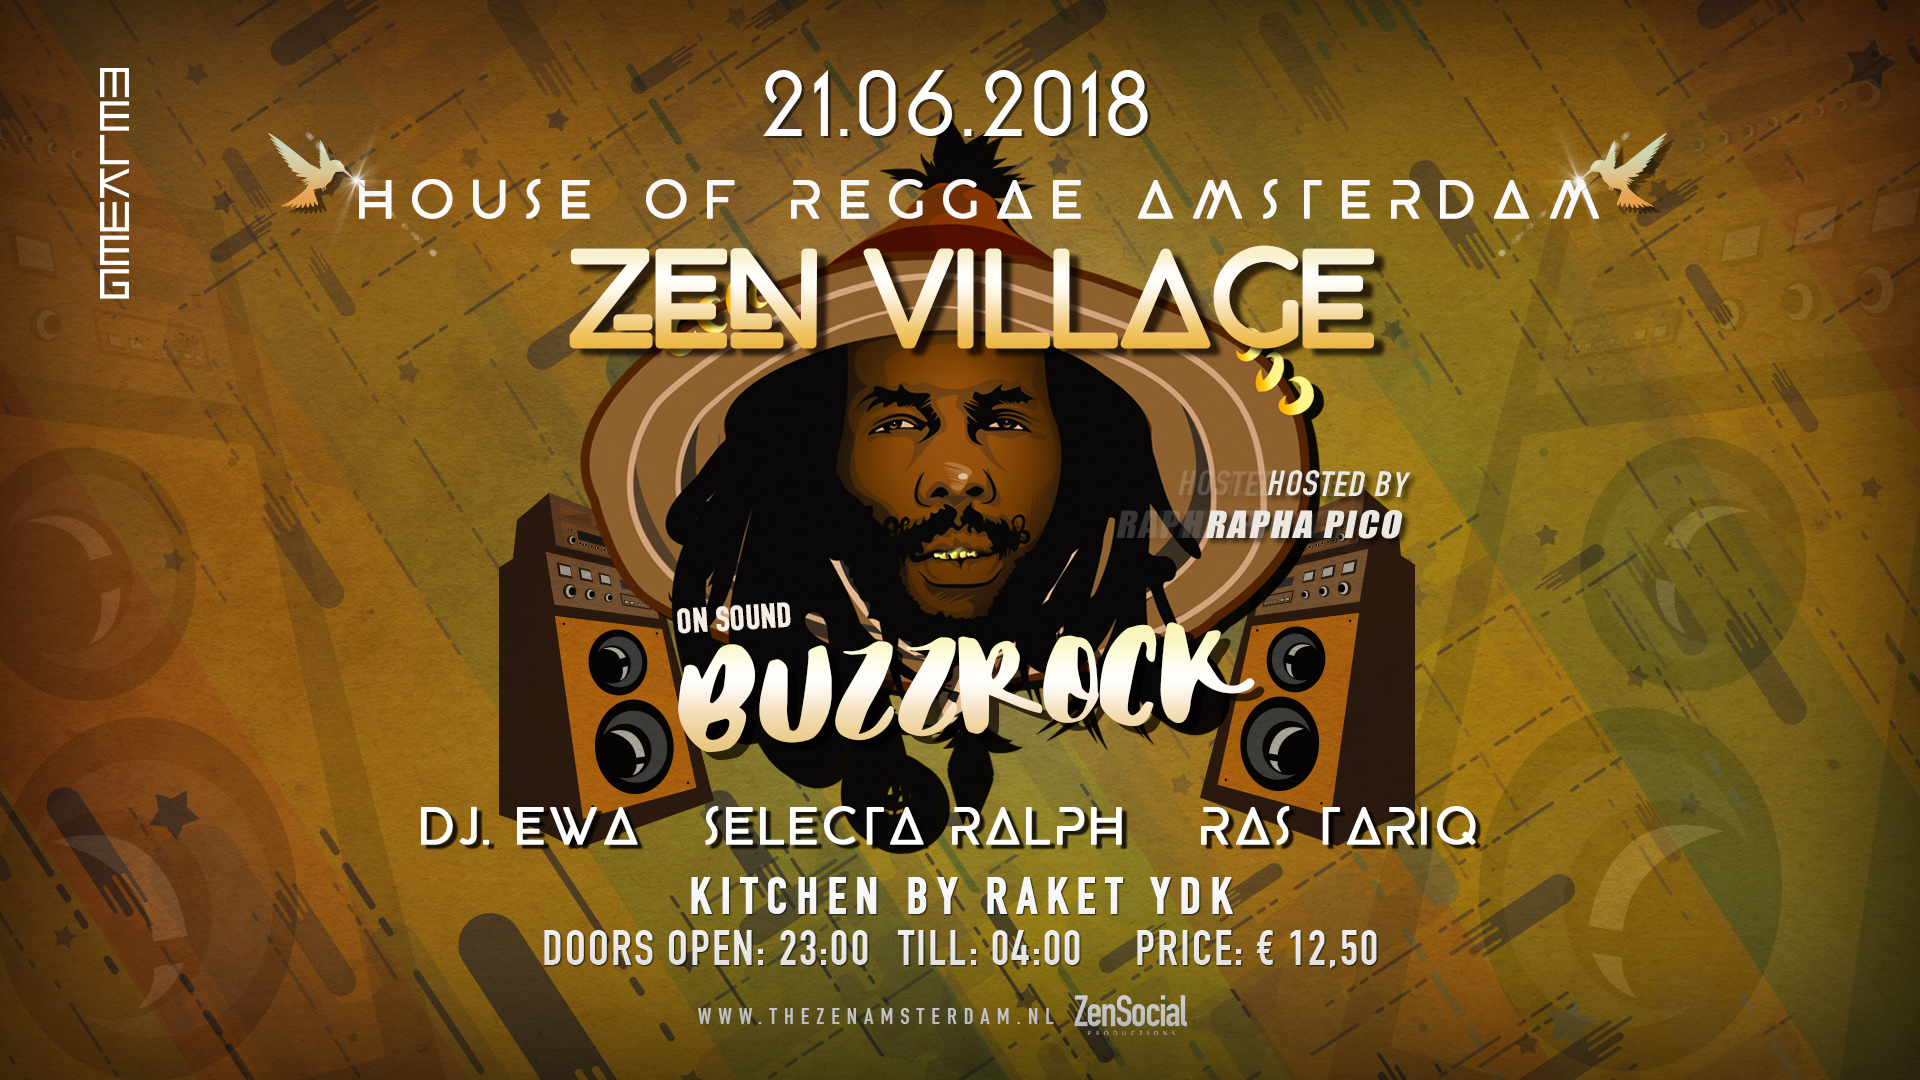 Zen Village: Buzzrock (Trinidad) – Melkweg Amsterdam